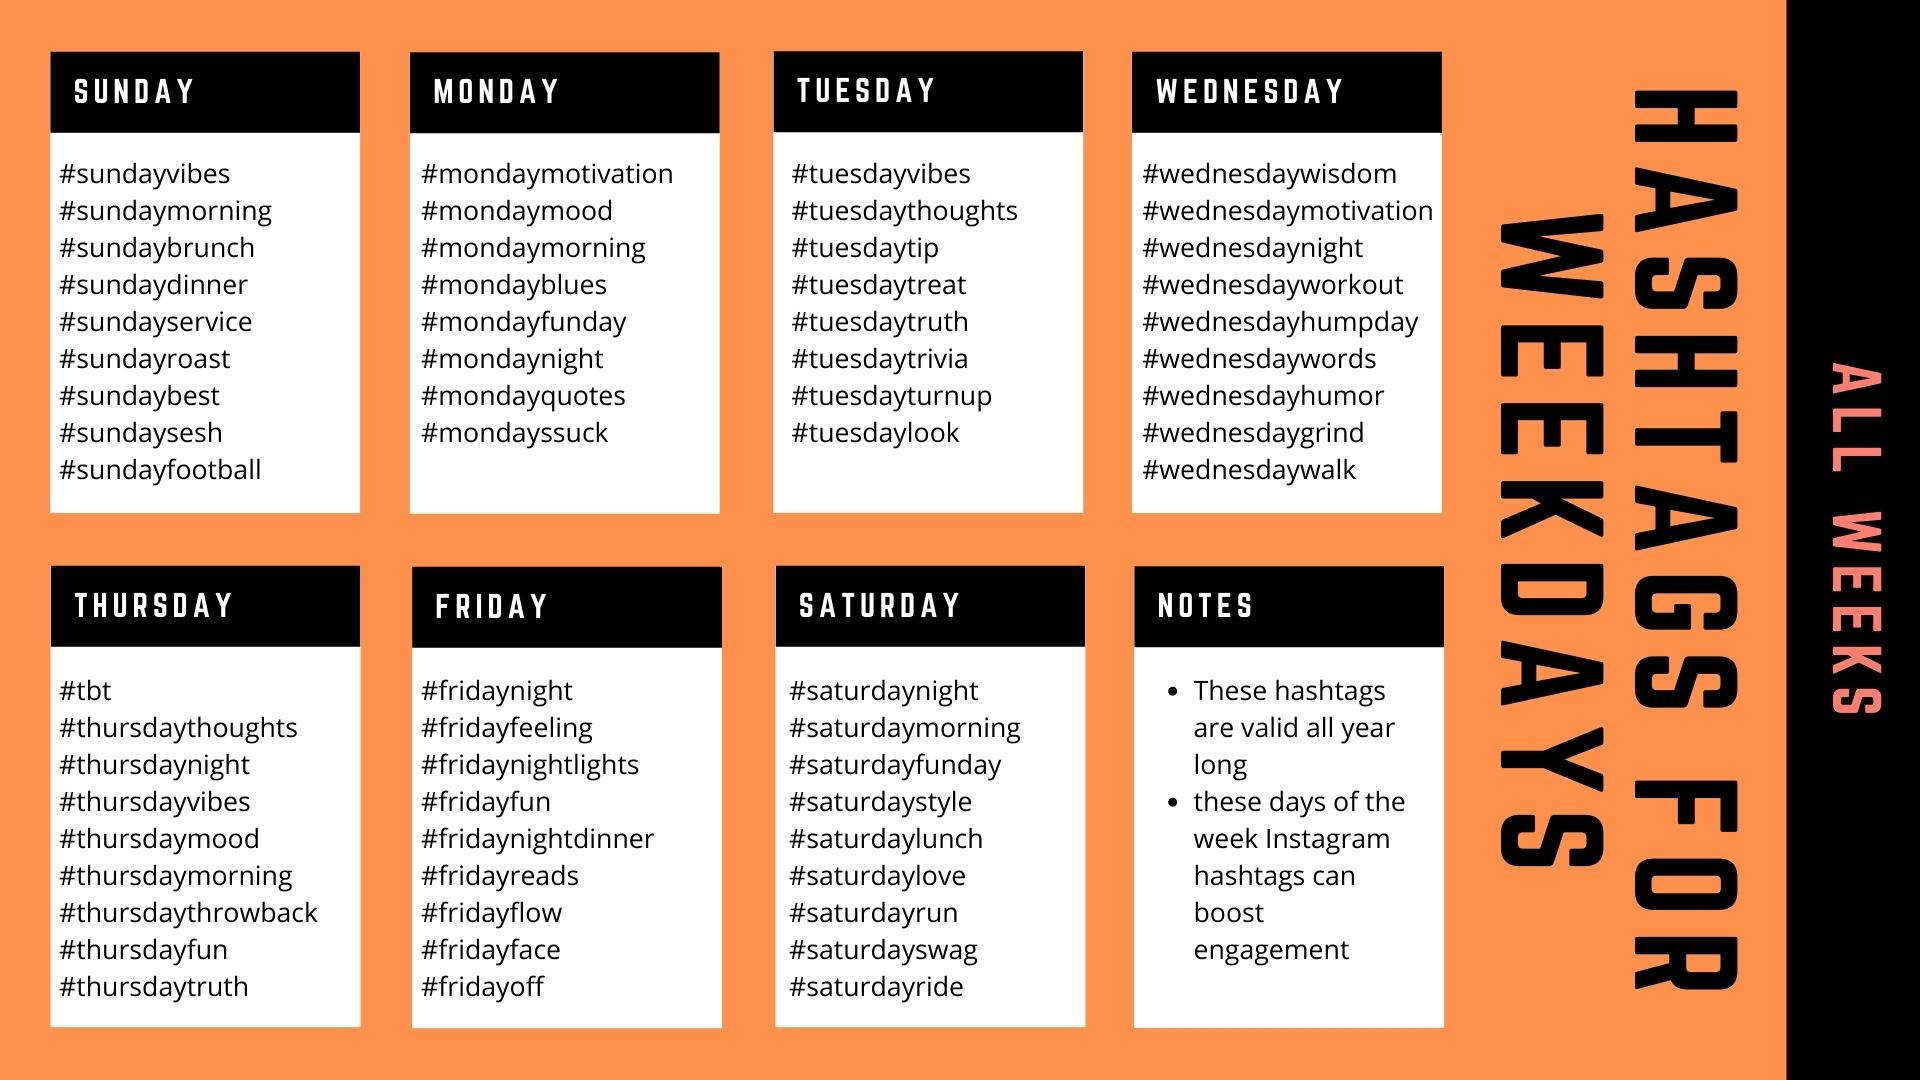 Weekly hashtags